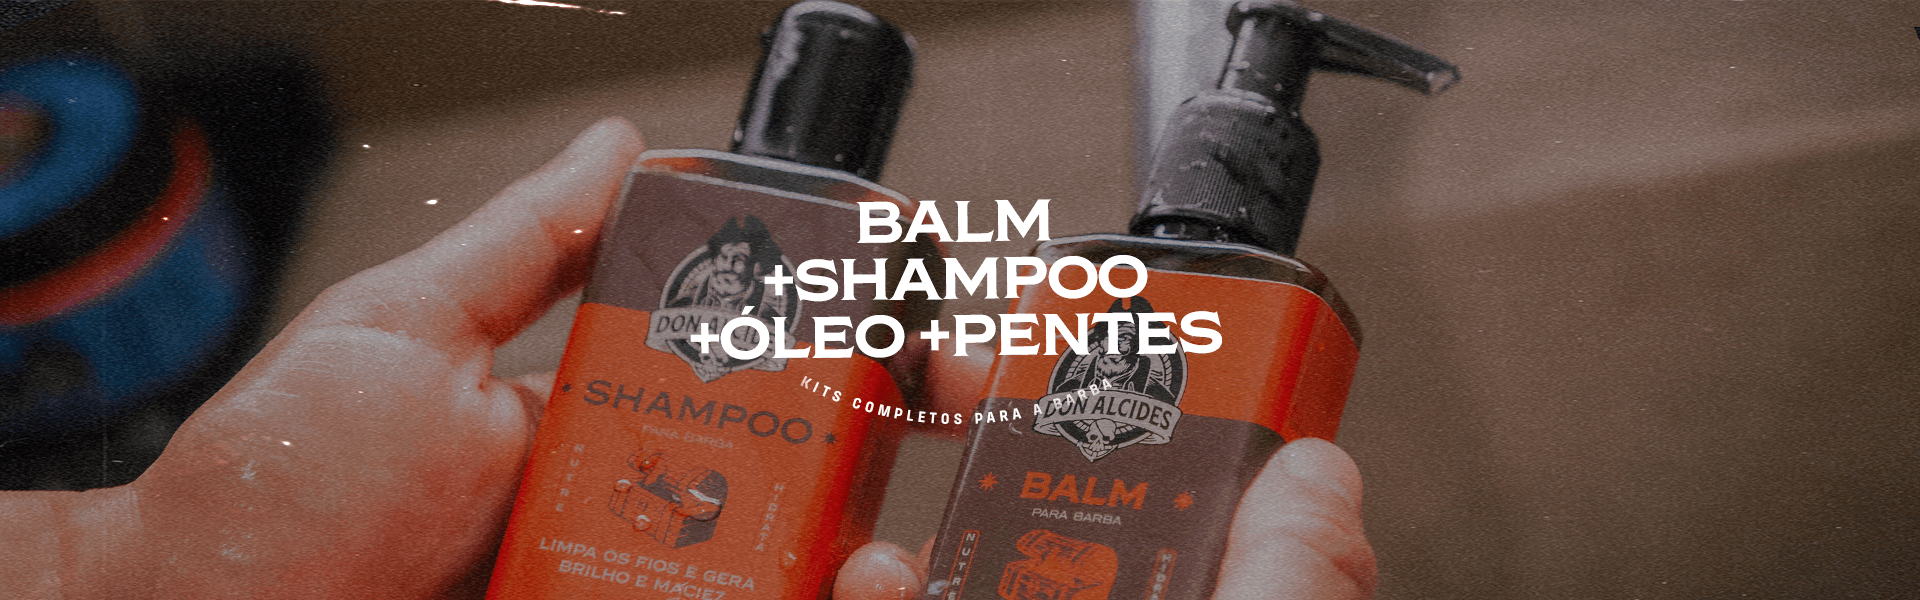 banner-meio-shampoo-bam-don-alcides-barba-negra